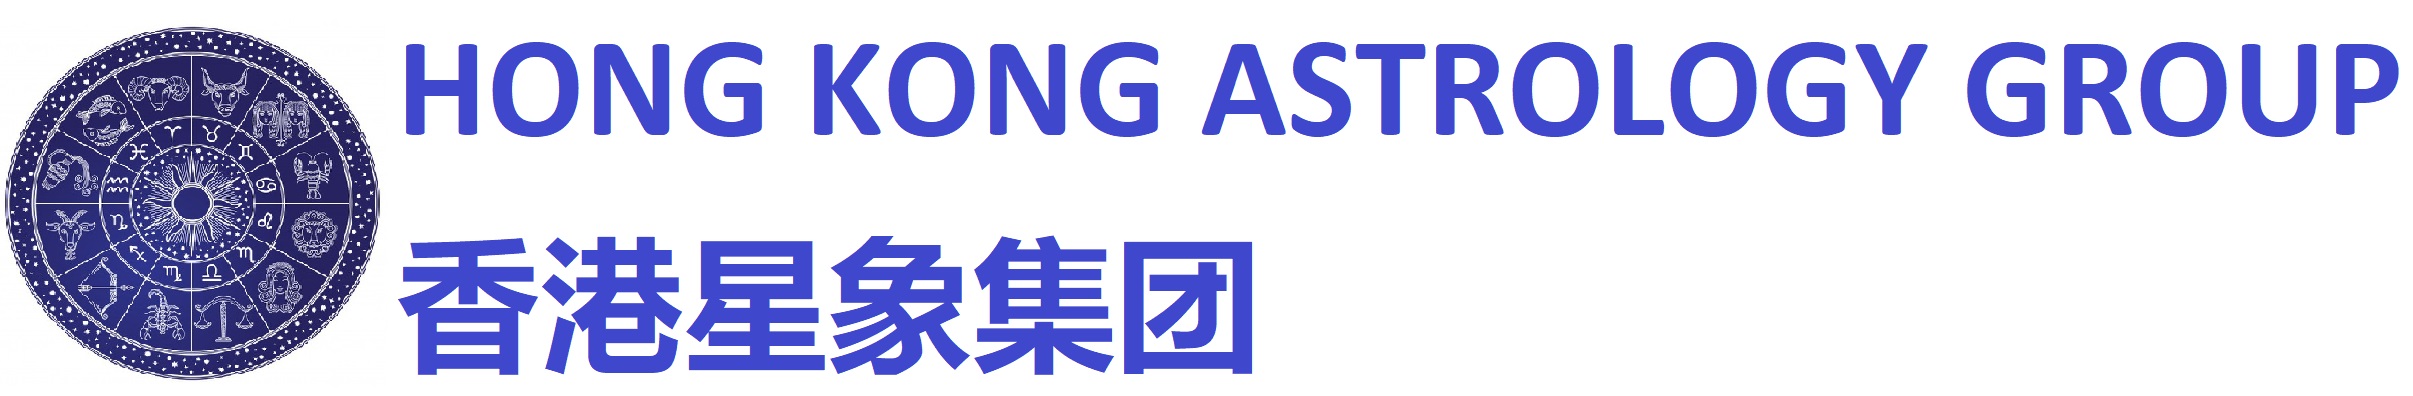 Hong Kong Astrology Group